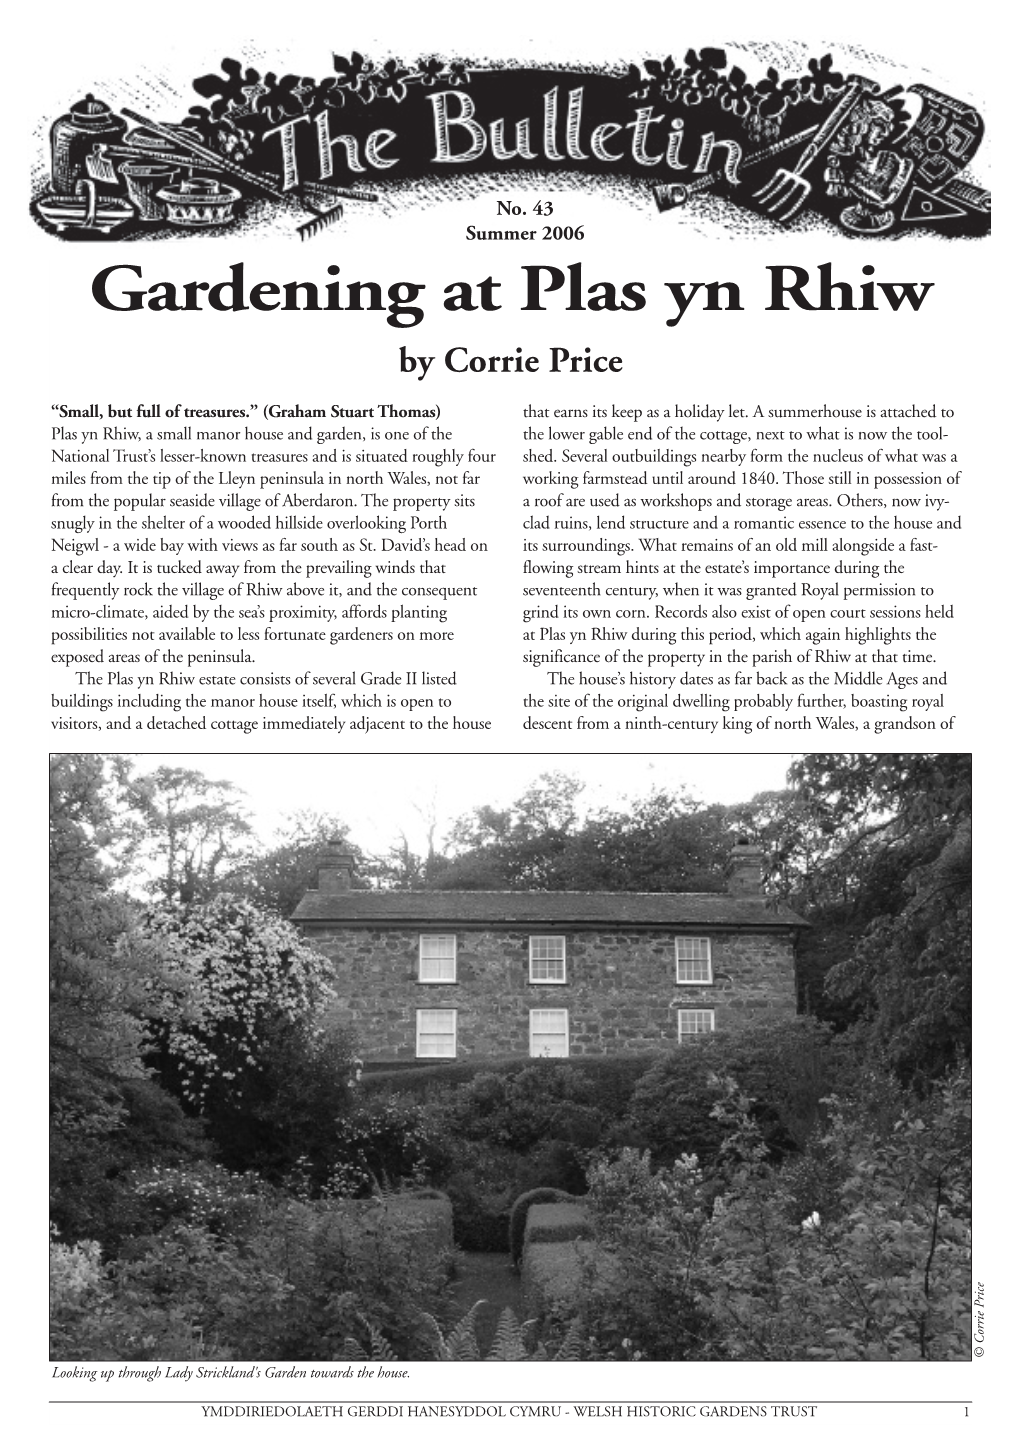 Gardening at Plas Yn Rhiw by Corrie Price